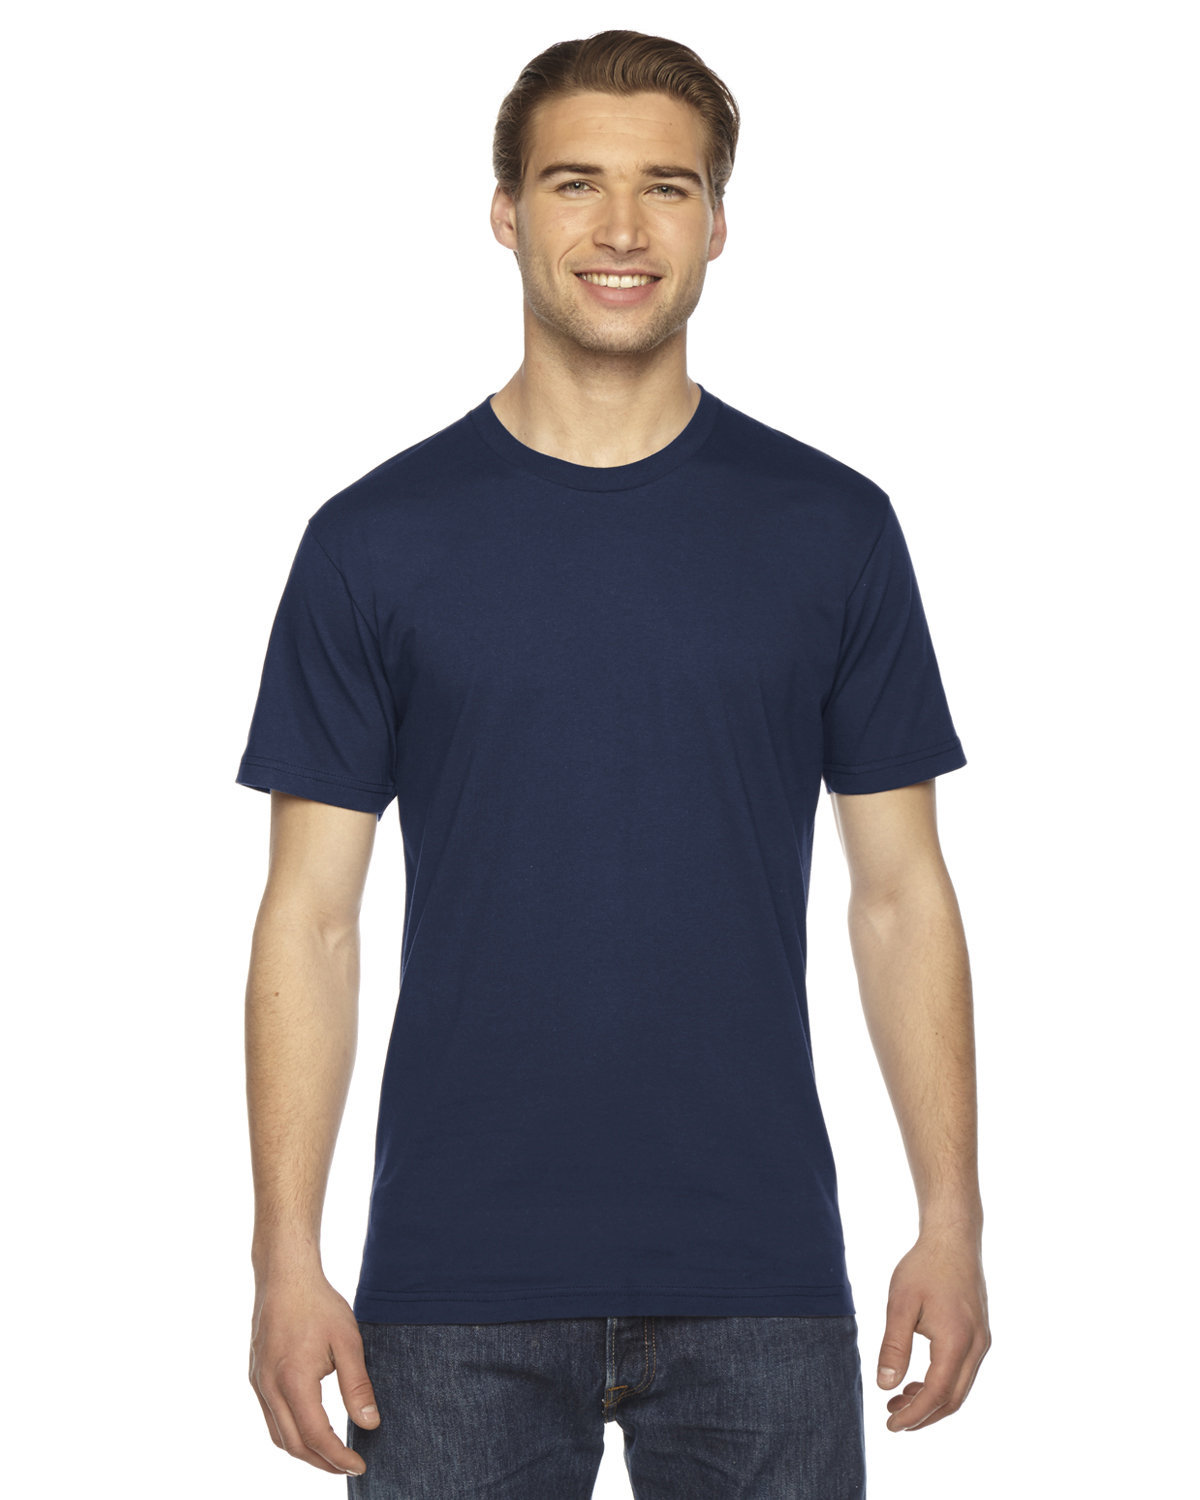 American Apparel Unisex Fine Jersey USA Made T-Shirt navy 